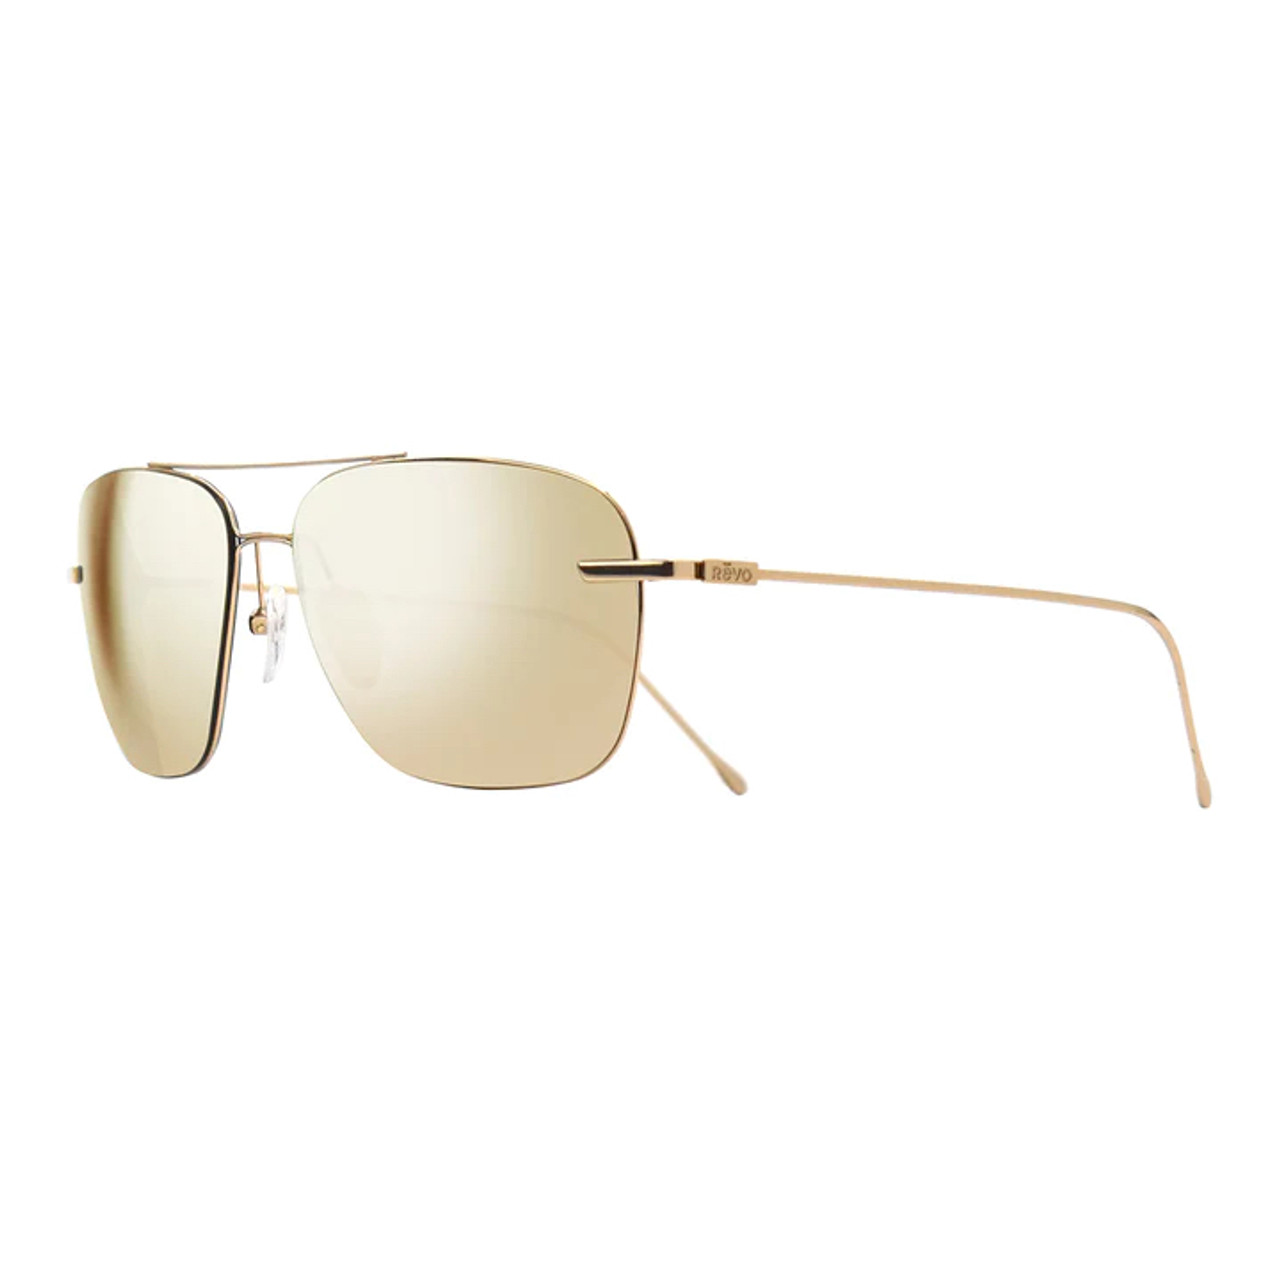 Revo Men's Espen Rectangle Sunglasses Graphite Lens with Matte Black Frame  - The Warming Store